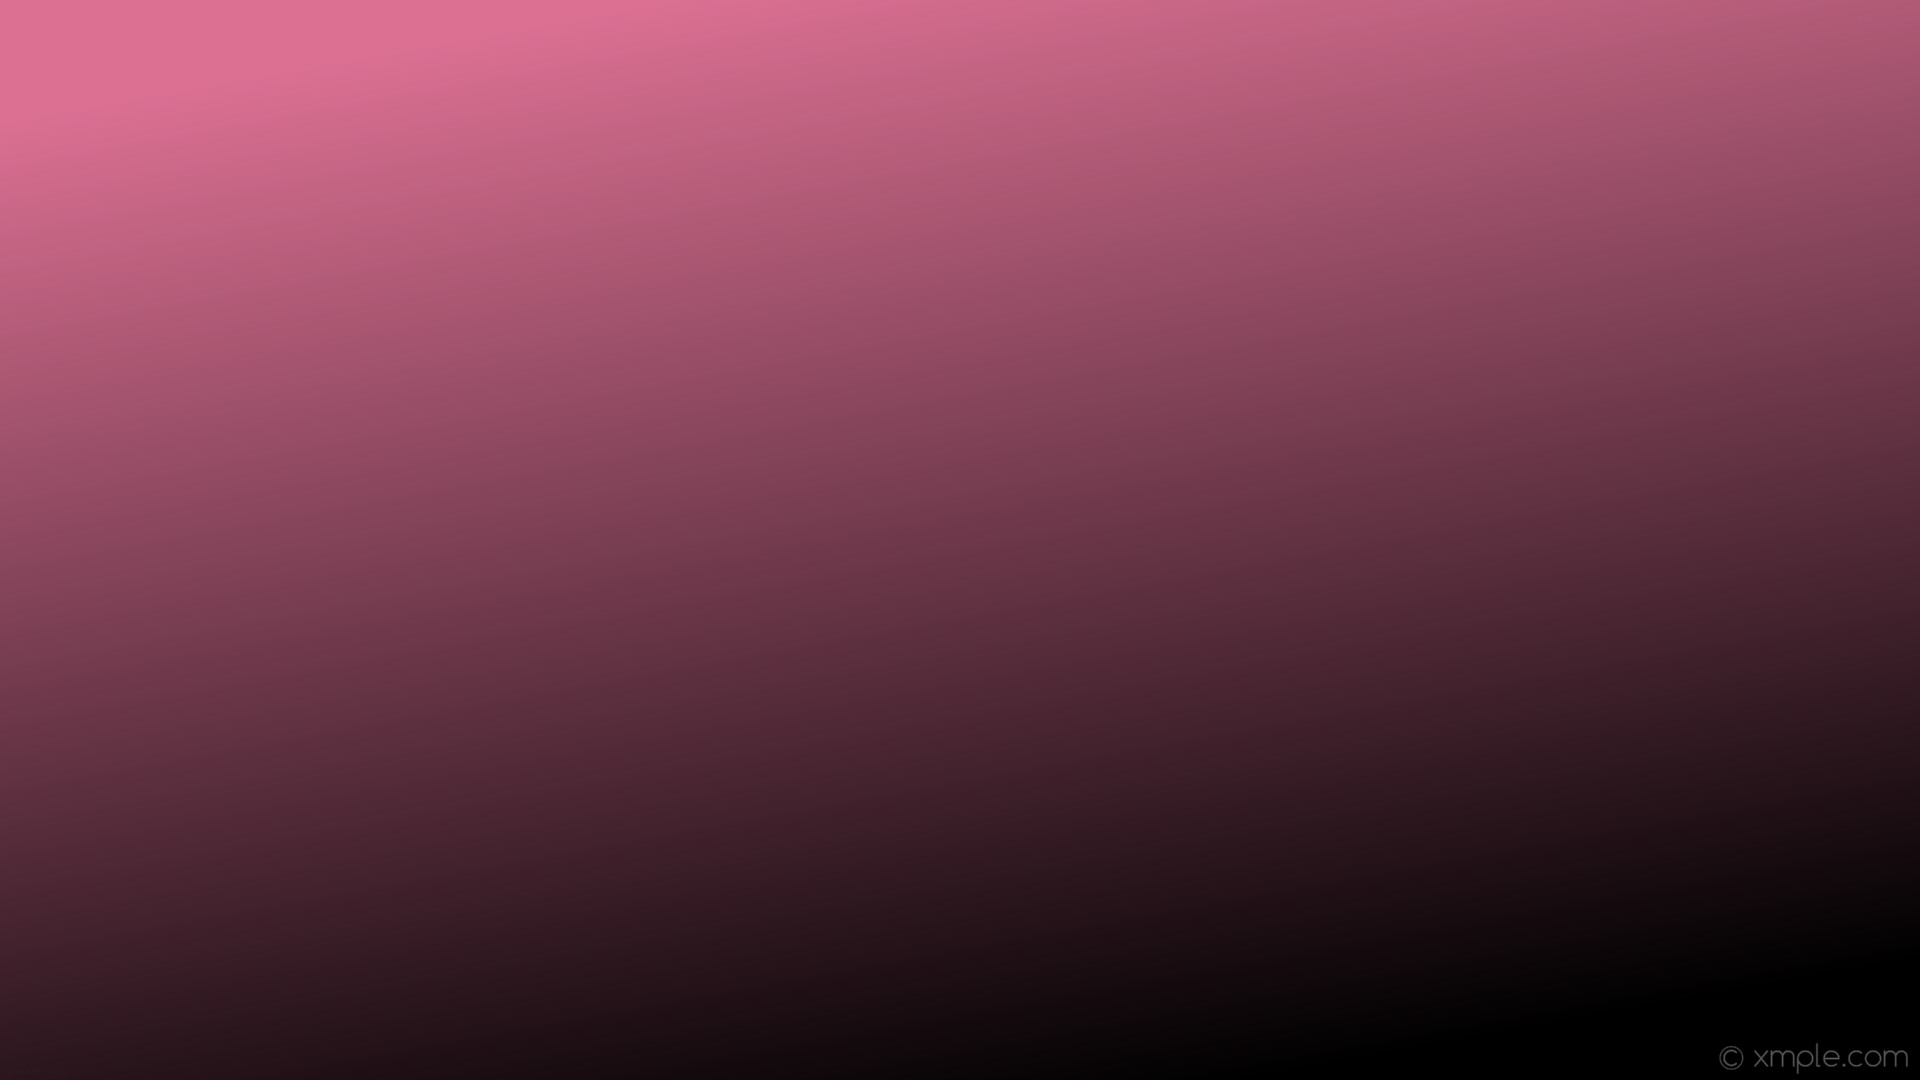 1920x1080 wallpaper black pink gradient linear pale violet red #000000 #db7093 300Â°